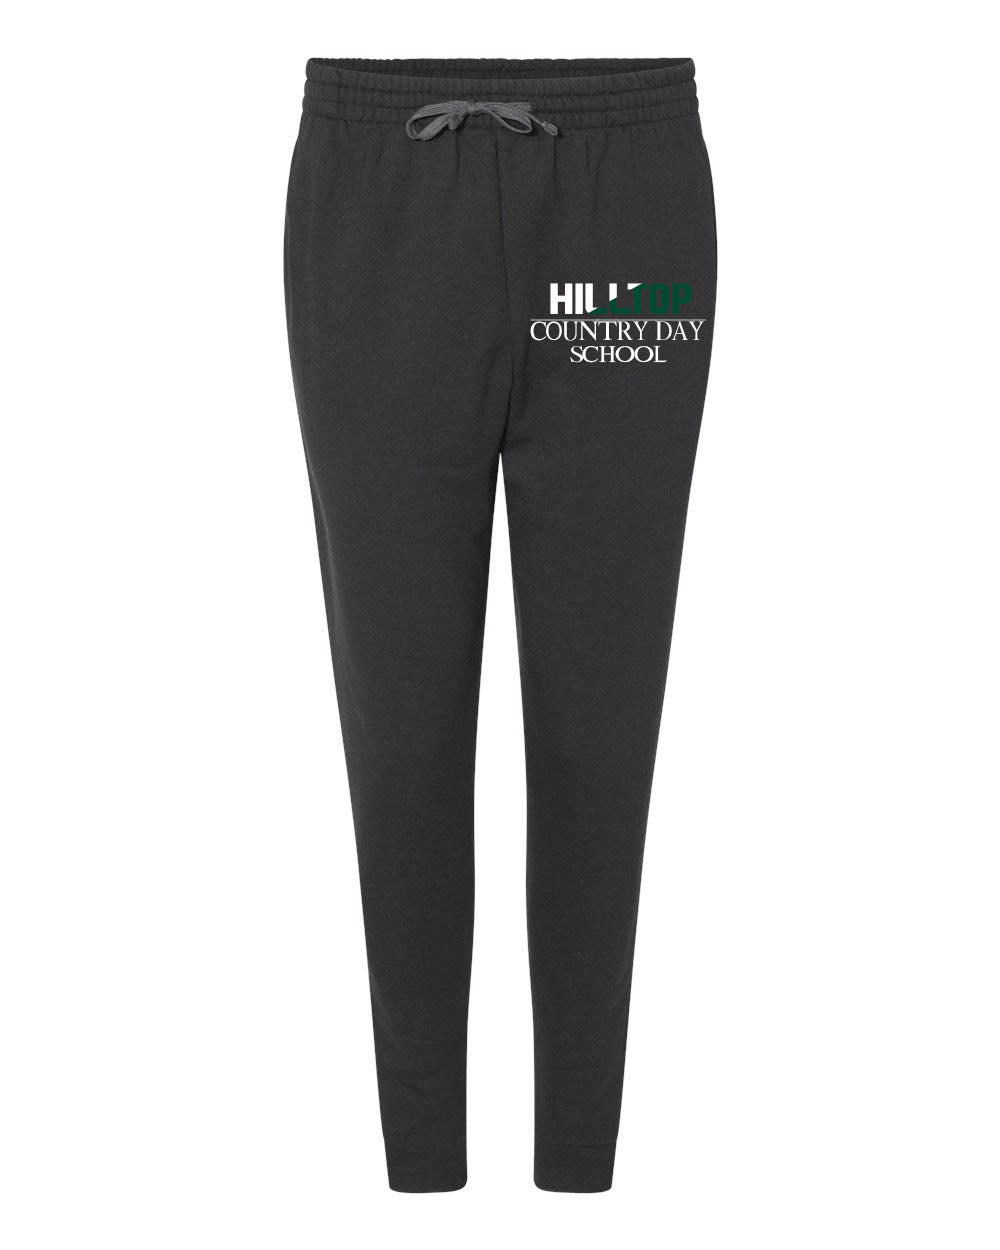 Hilltop Country Day School design 4 Sweatpants